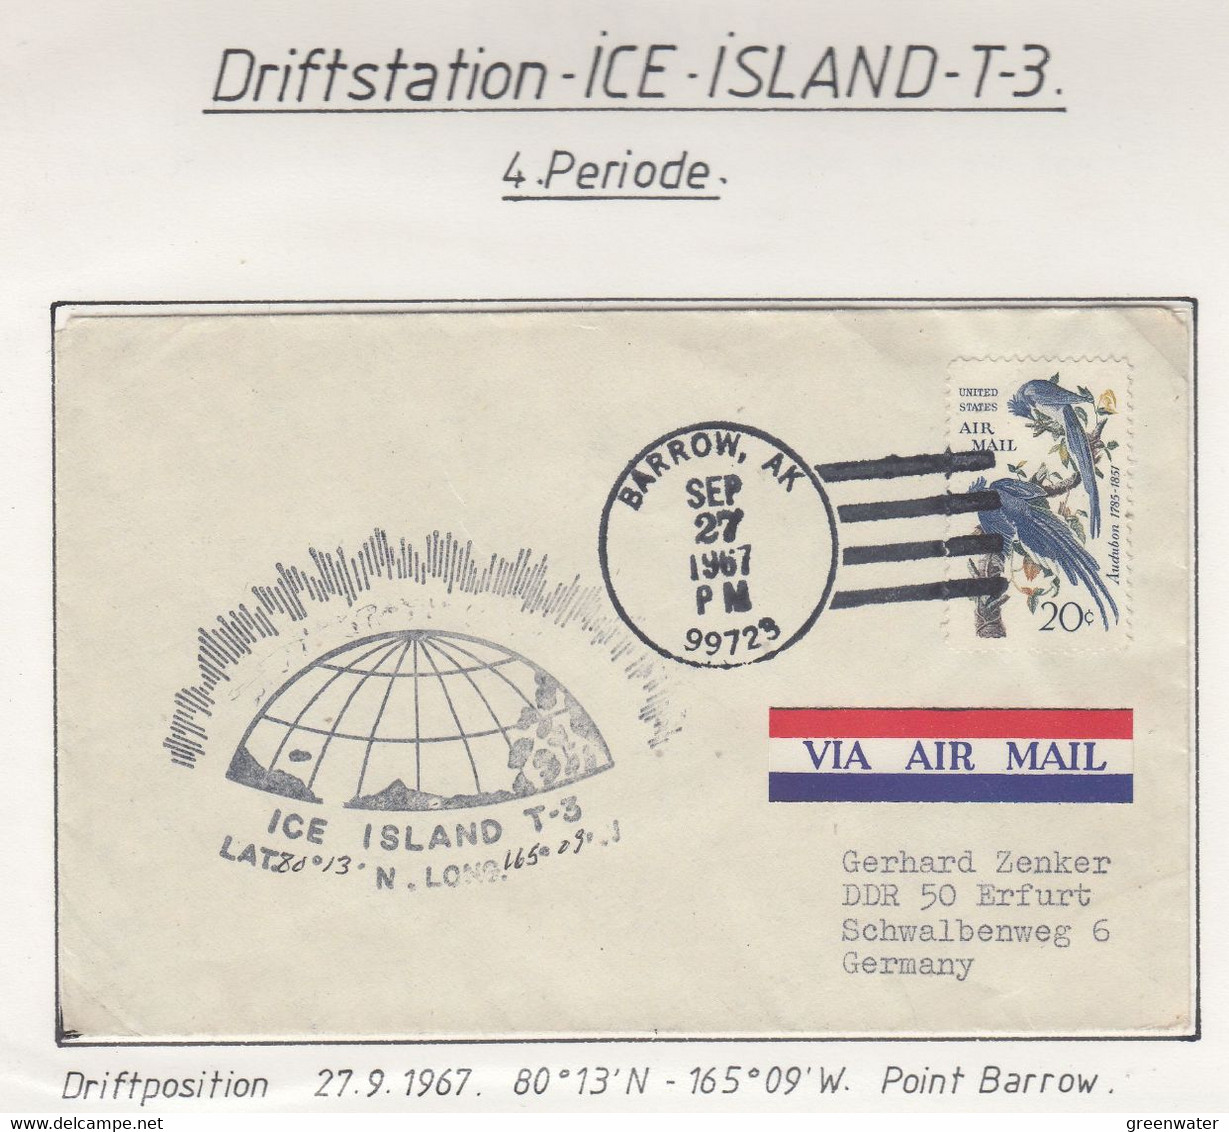 USA Driftstation ICE-ISLAND T-3 Cover Ca  Ice Island T-3 Periode 4 Ca Sep 27 1967  (DR124) - Forschungsstationen & Arctic Driftstationen